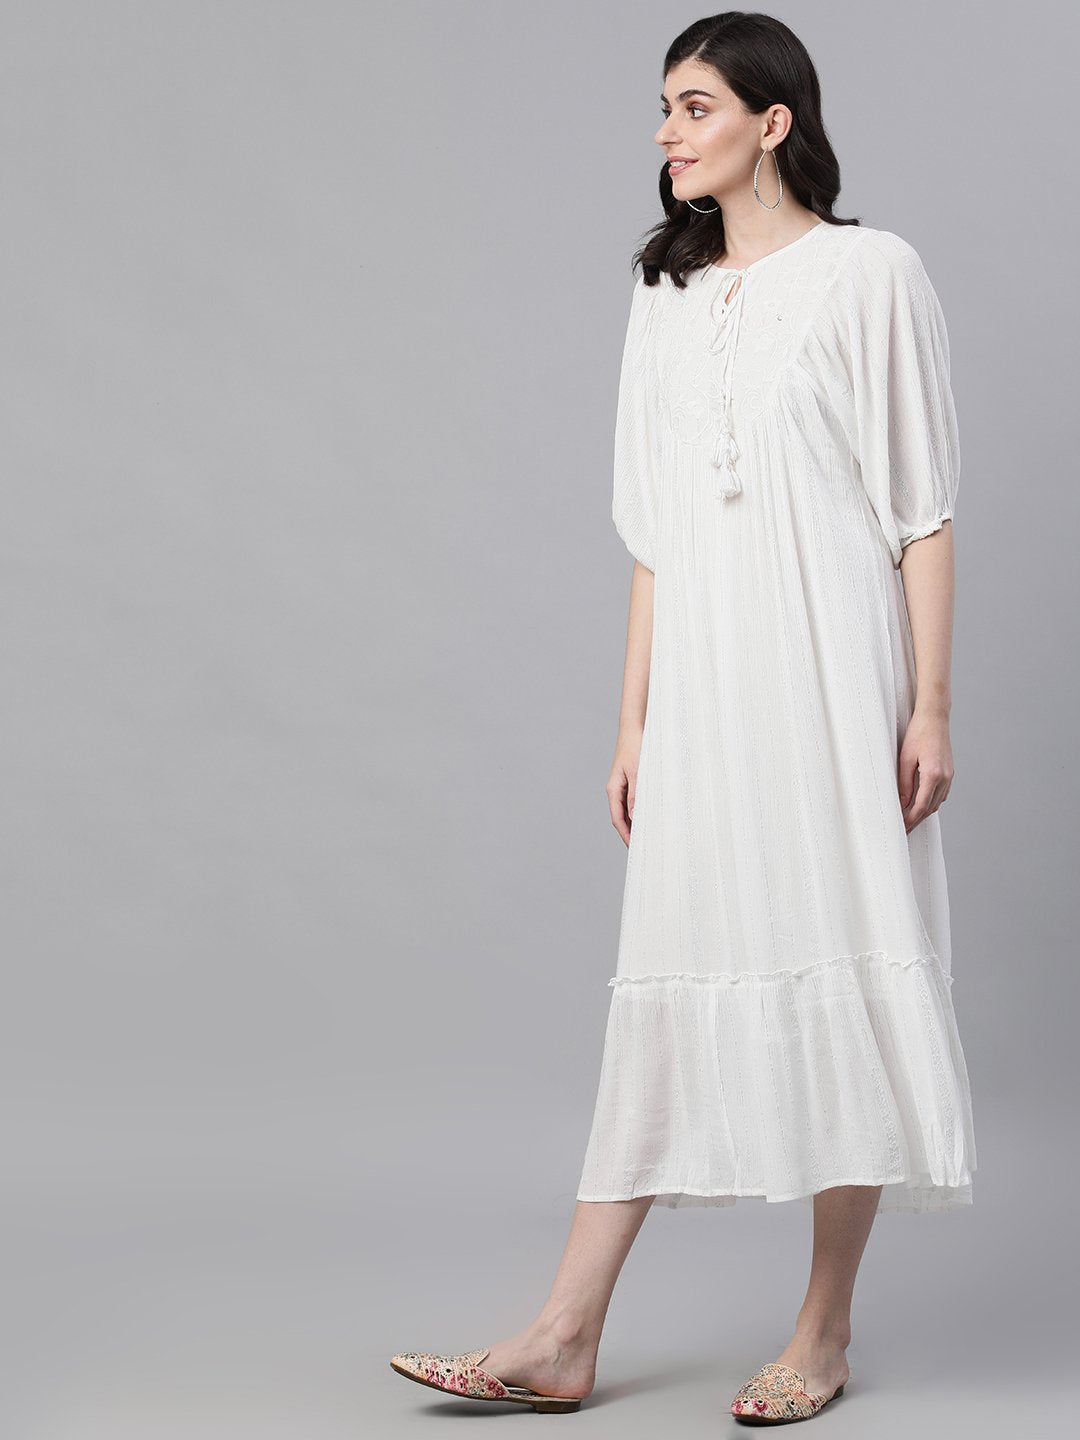 Ishin Women's Rayon White Silver Lurex Embroidered Ruffle Dress